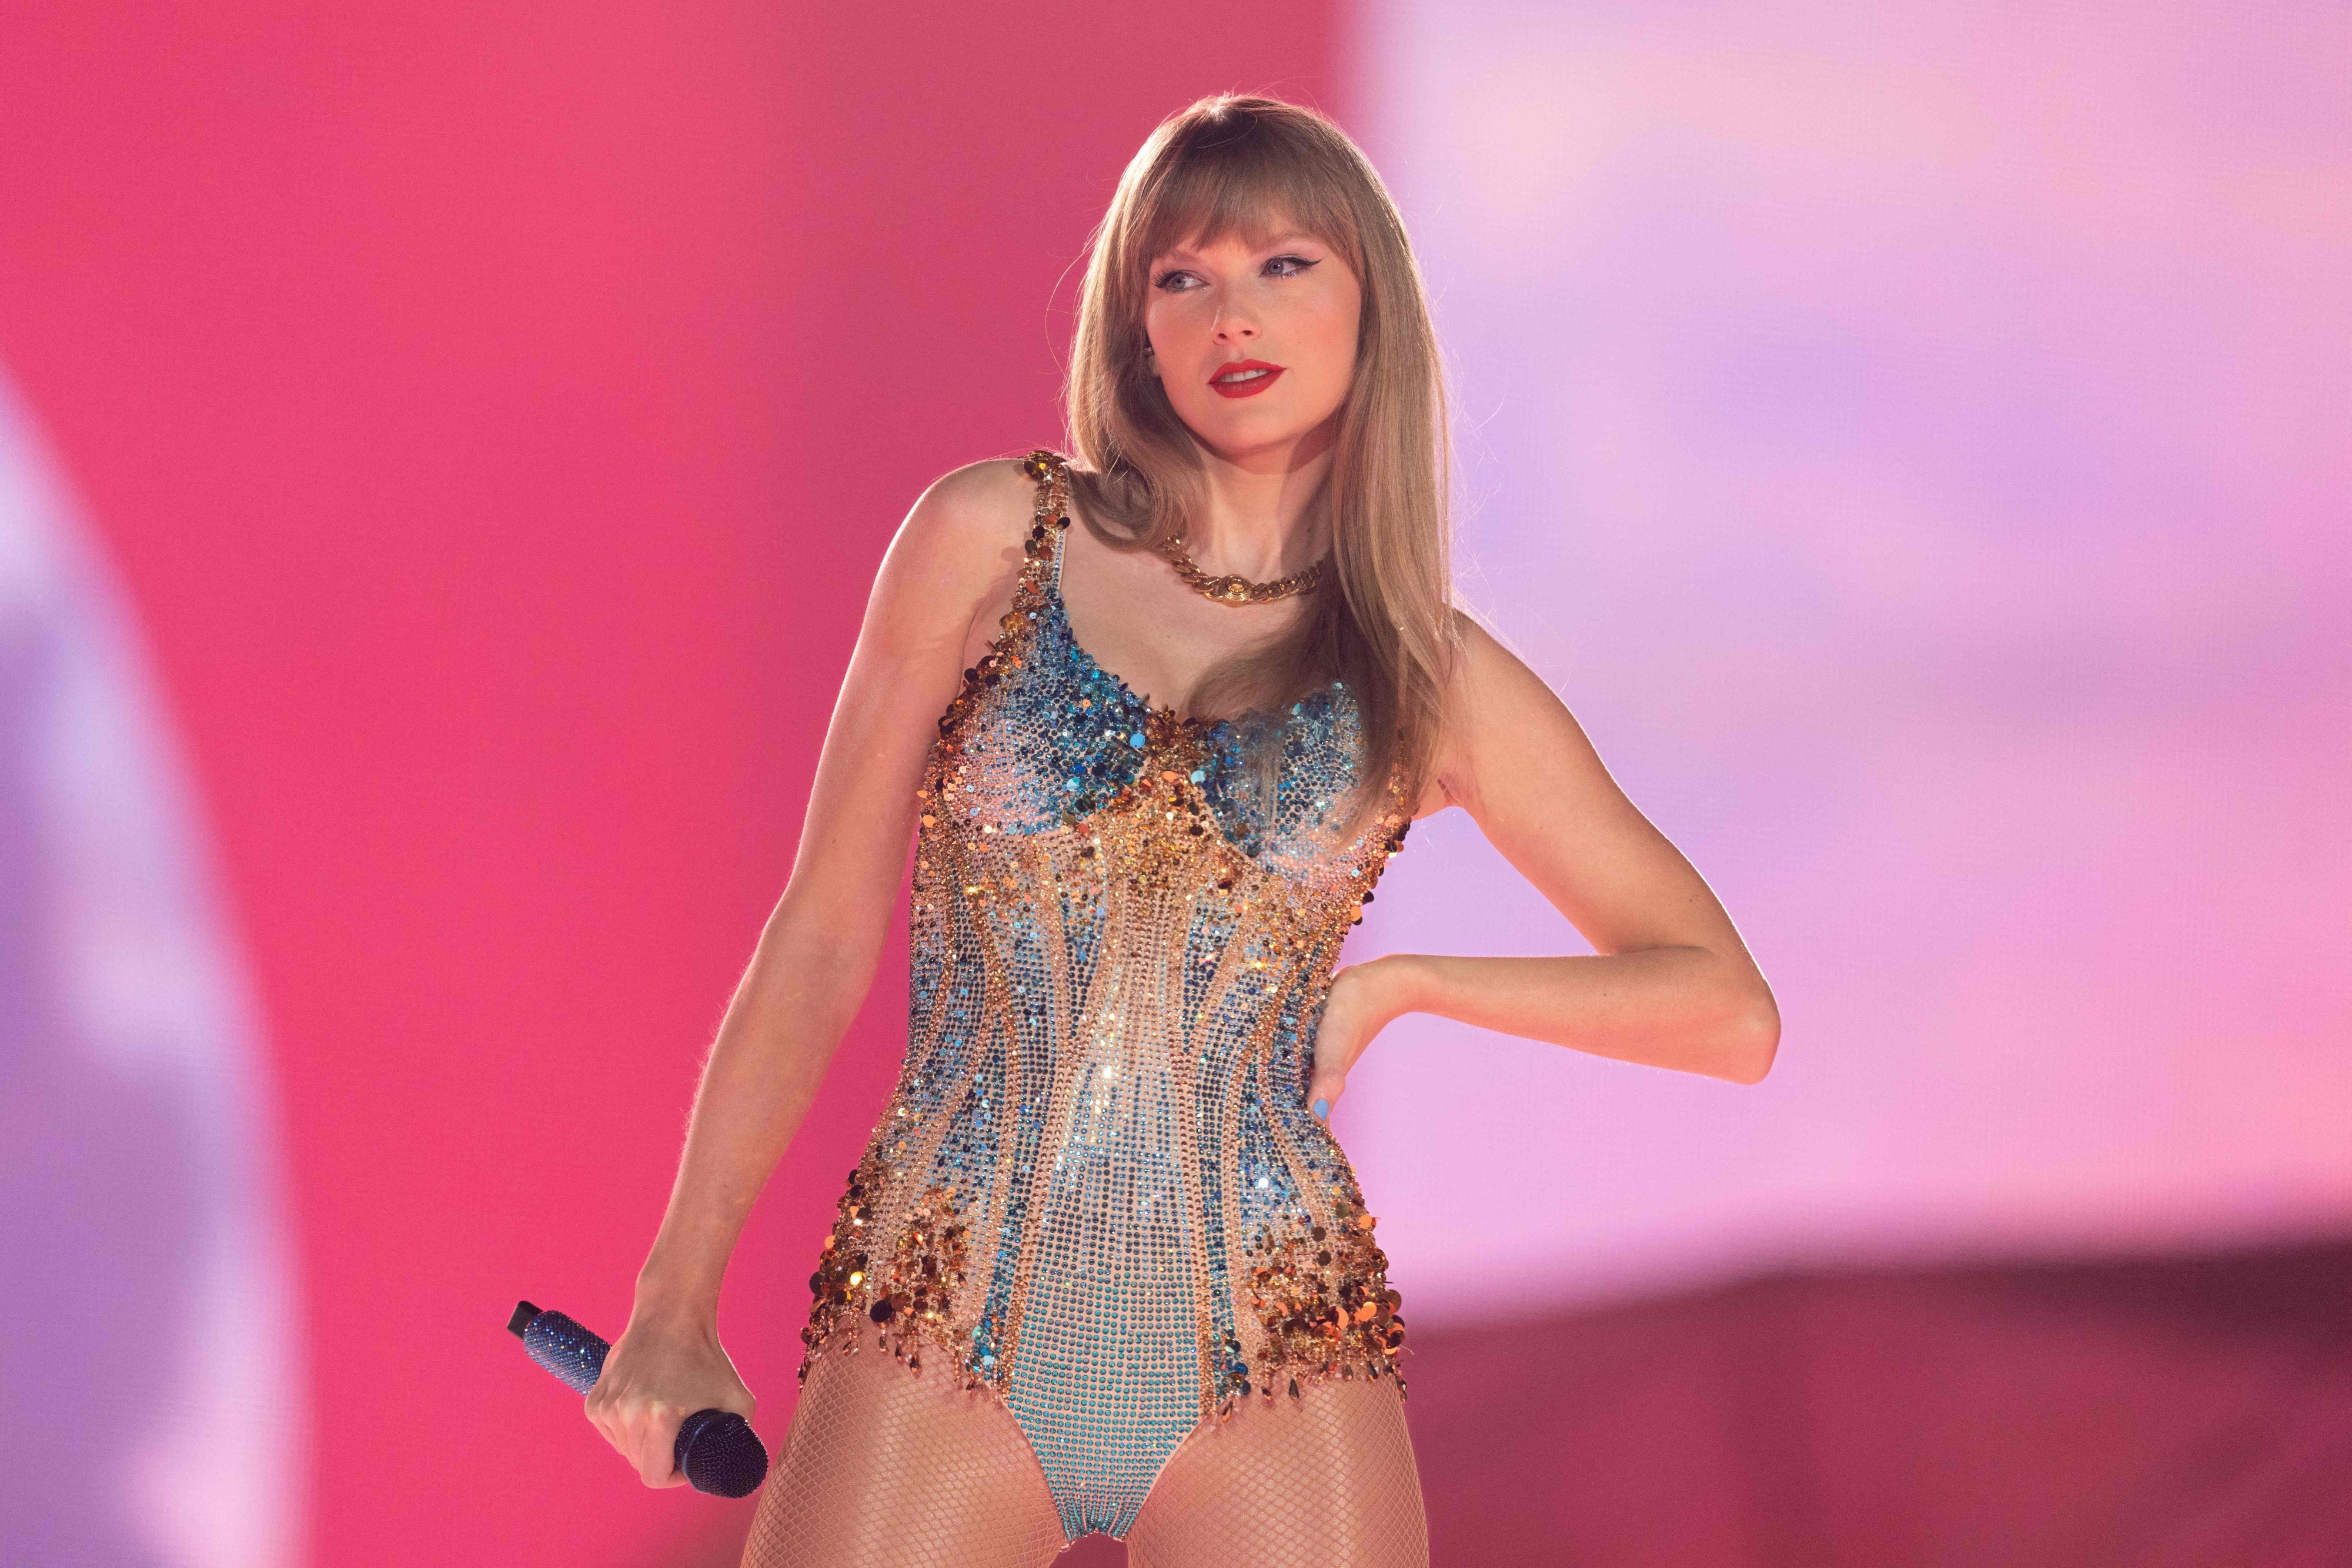 Taylor onstage